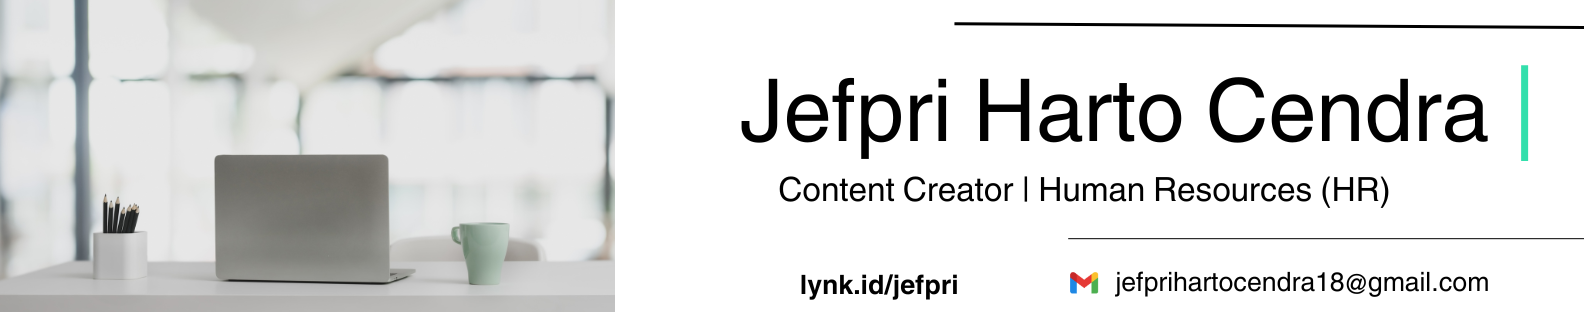 Jefpri Harto Cendra's profile banner